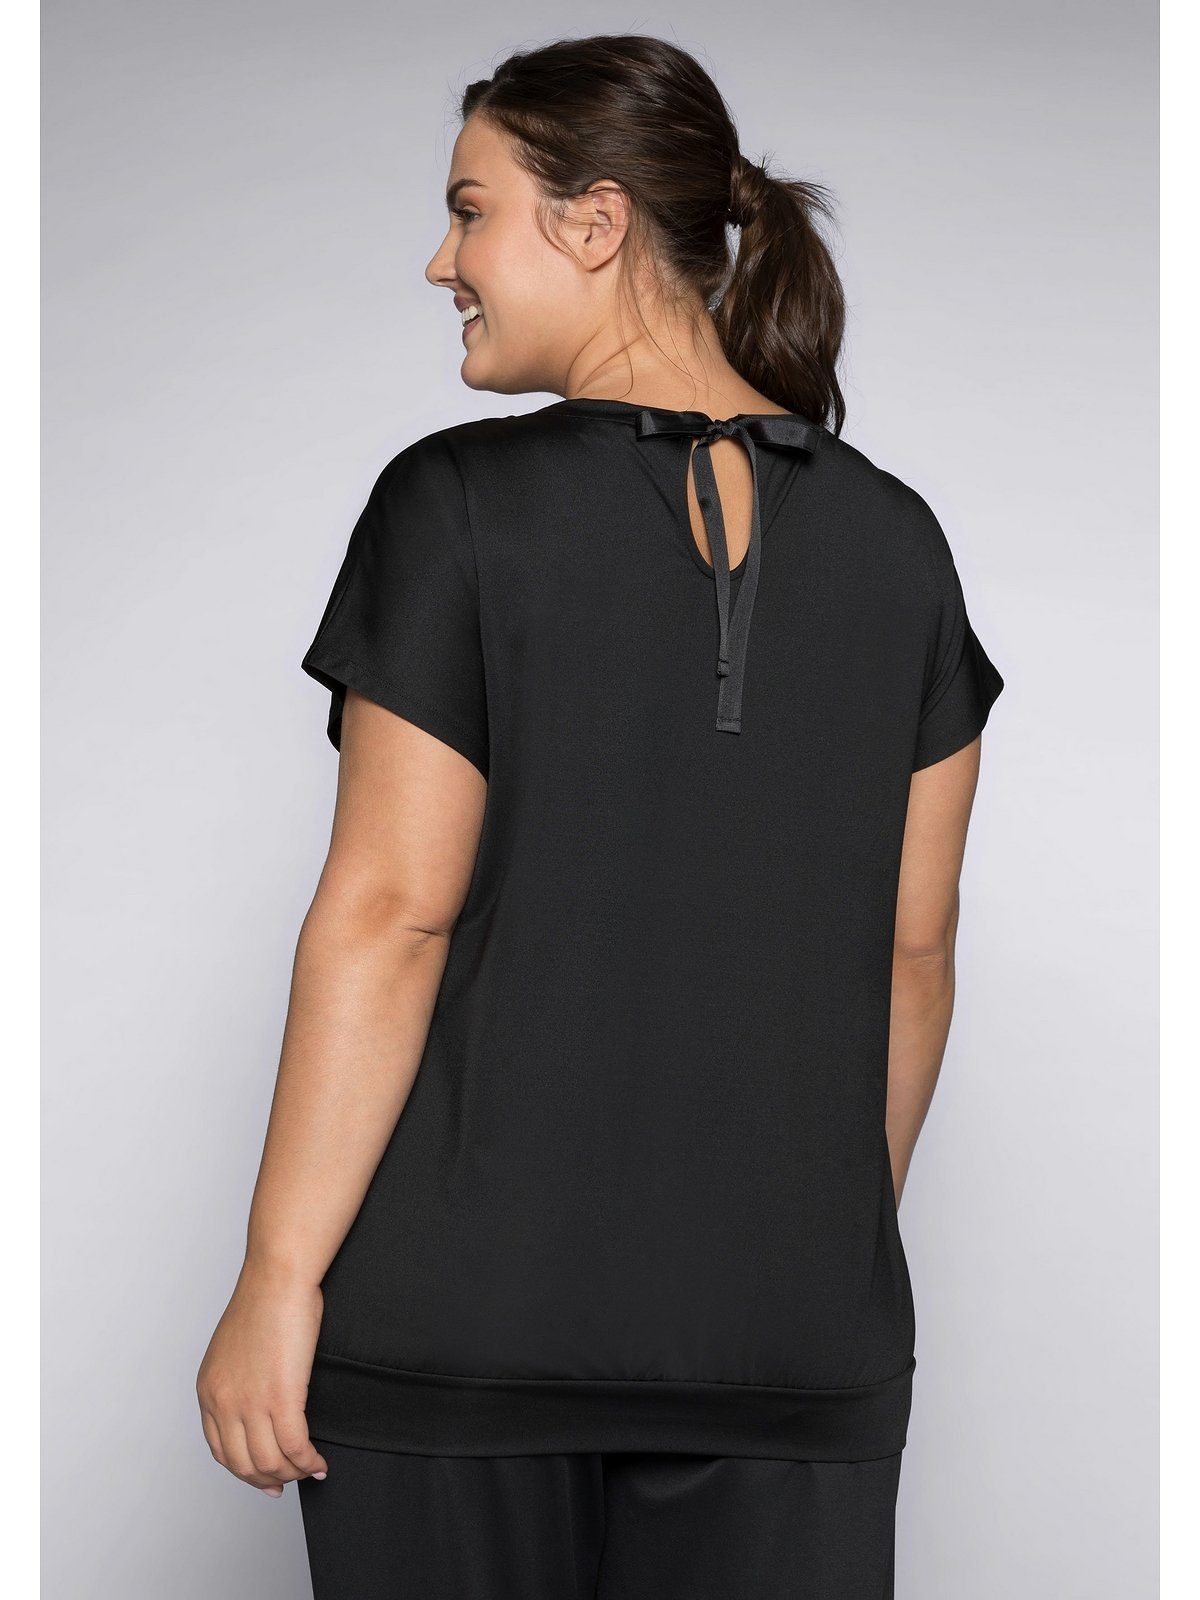 Große T-Shirt aus Sheego schwarz Funktionsmaterial Größen